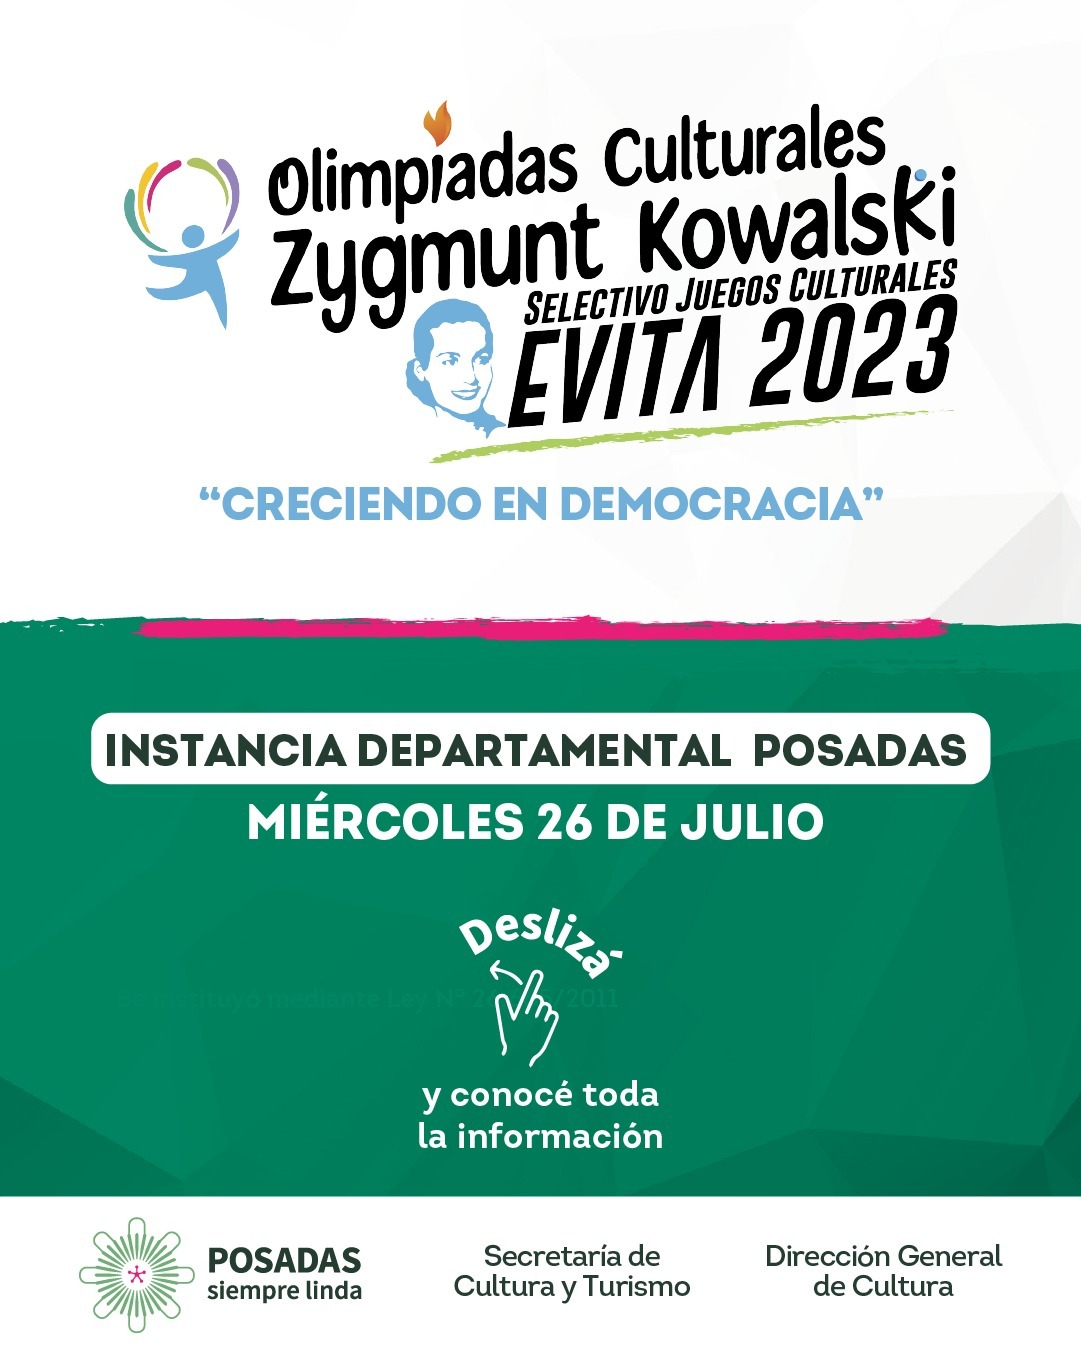 Olimpiadas Culturales "Zygmunt Kowalski", rumbo a los Evita 2023 imagen-1